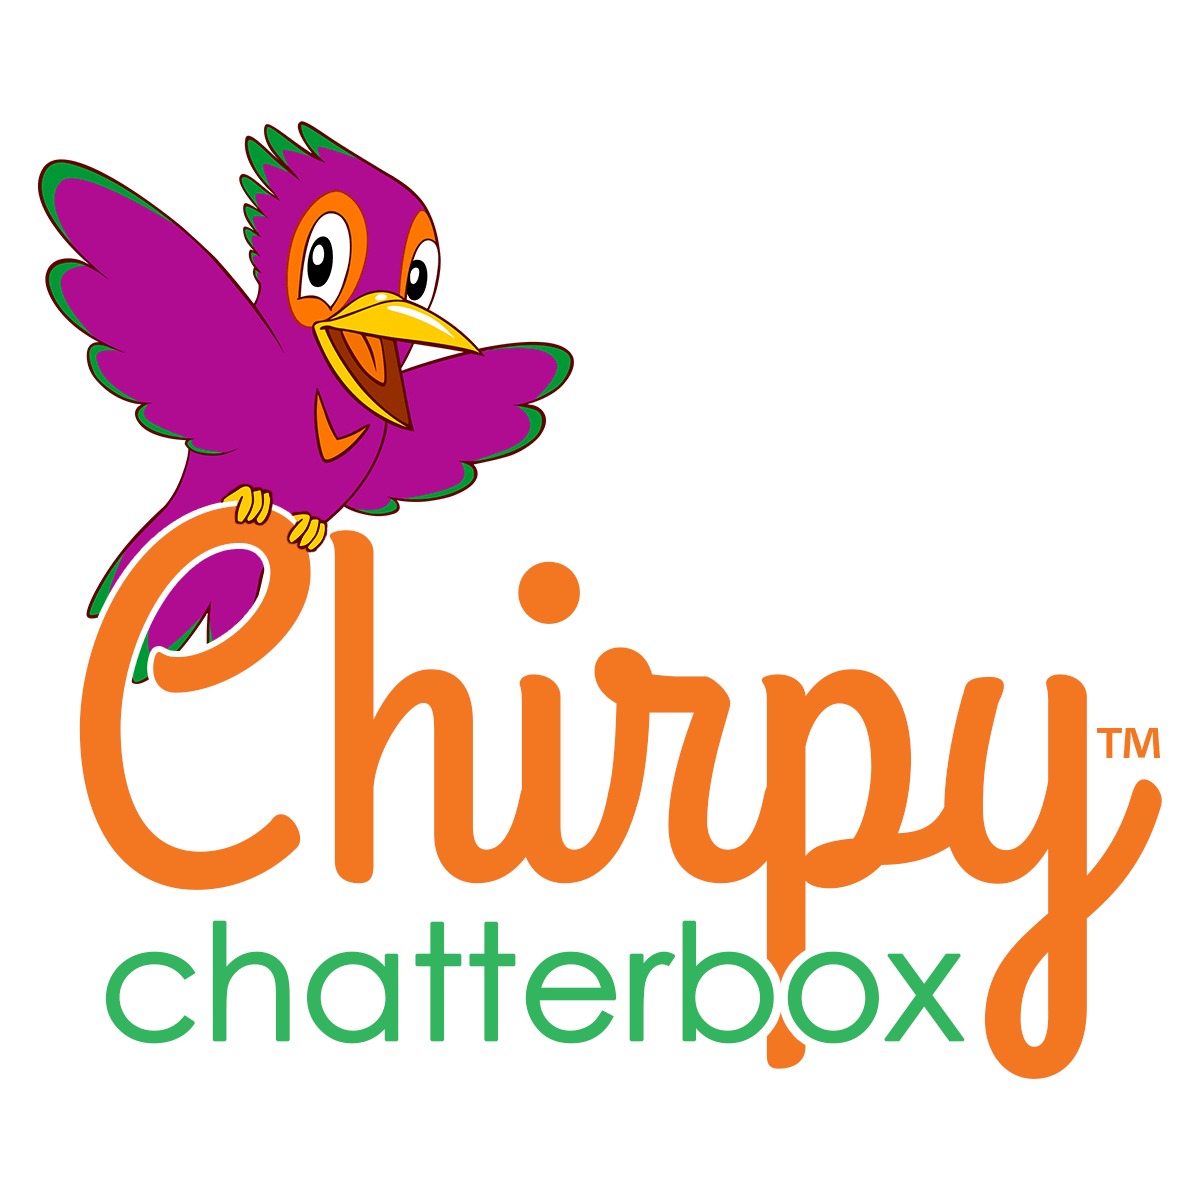 Chirpy Chatterbox